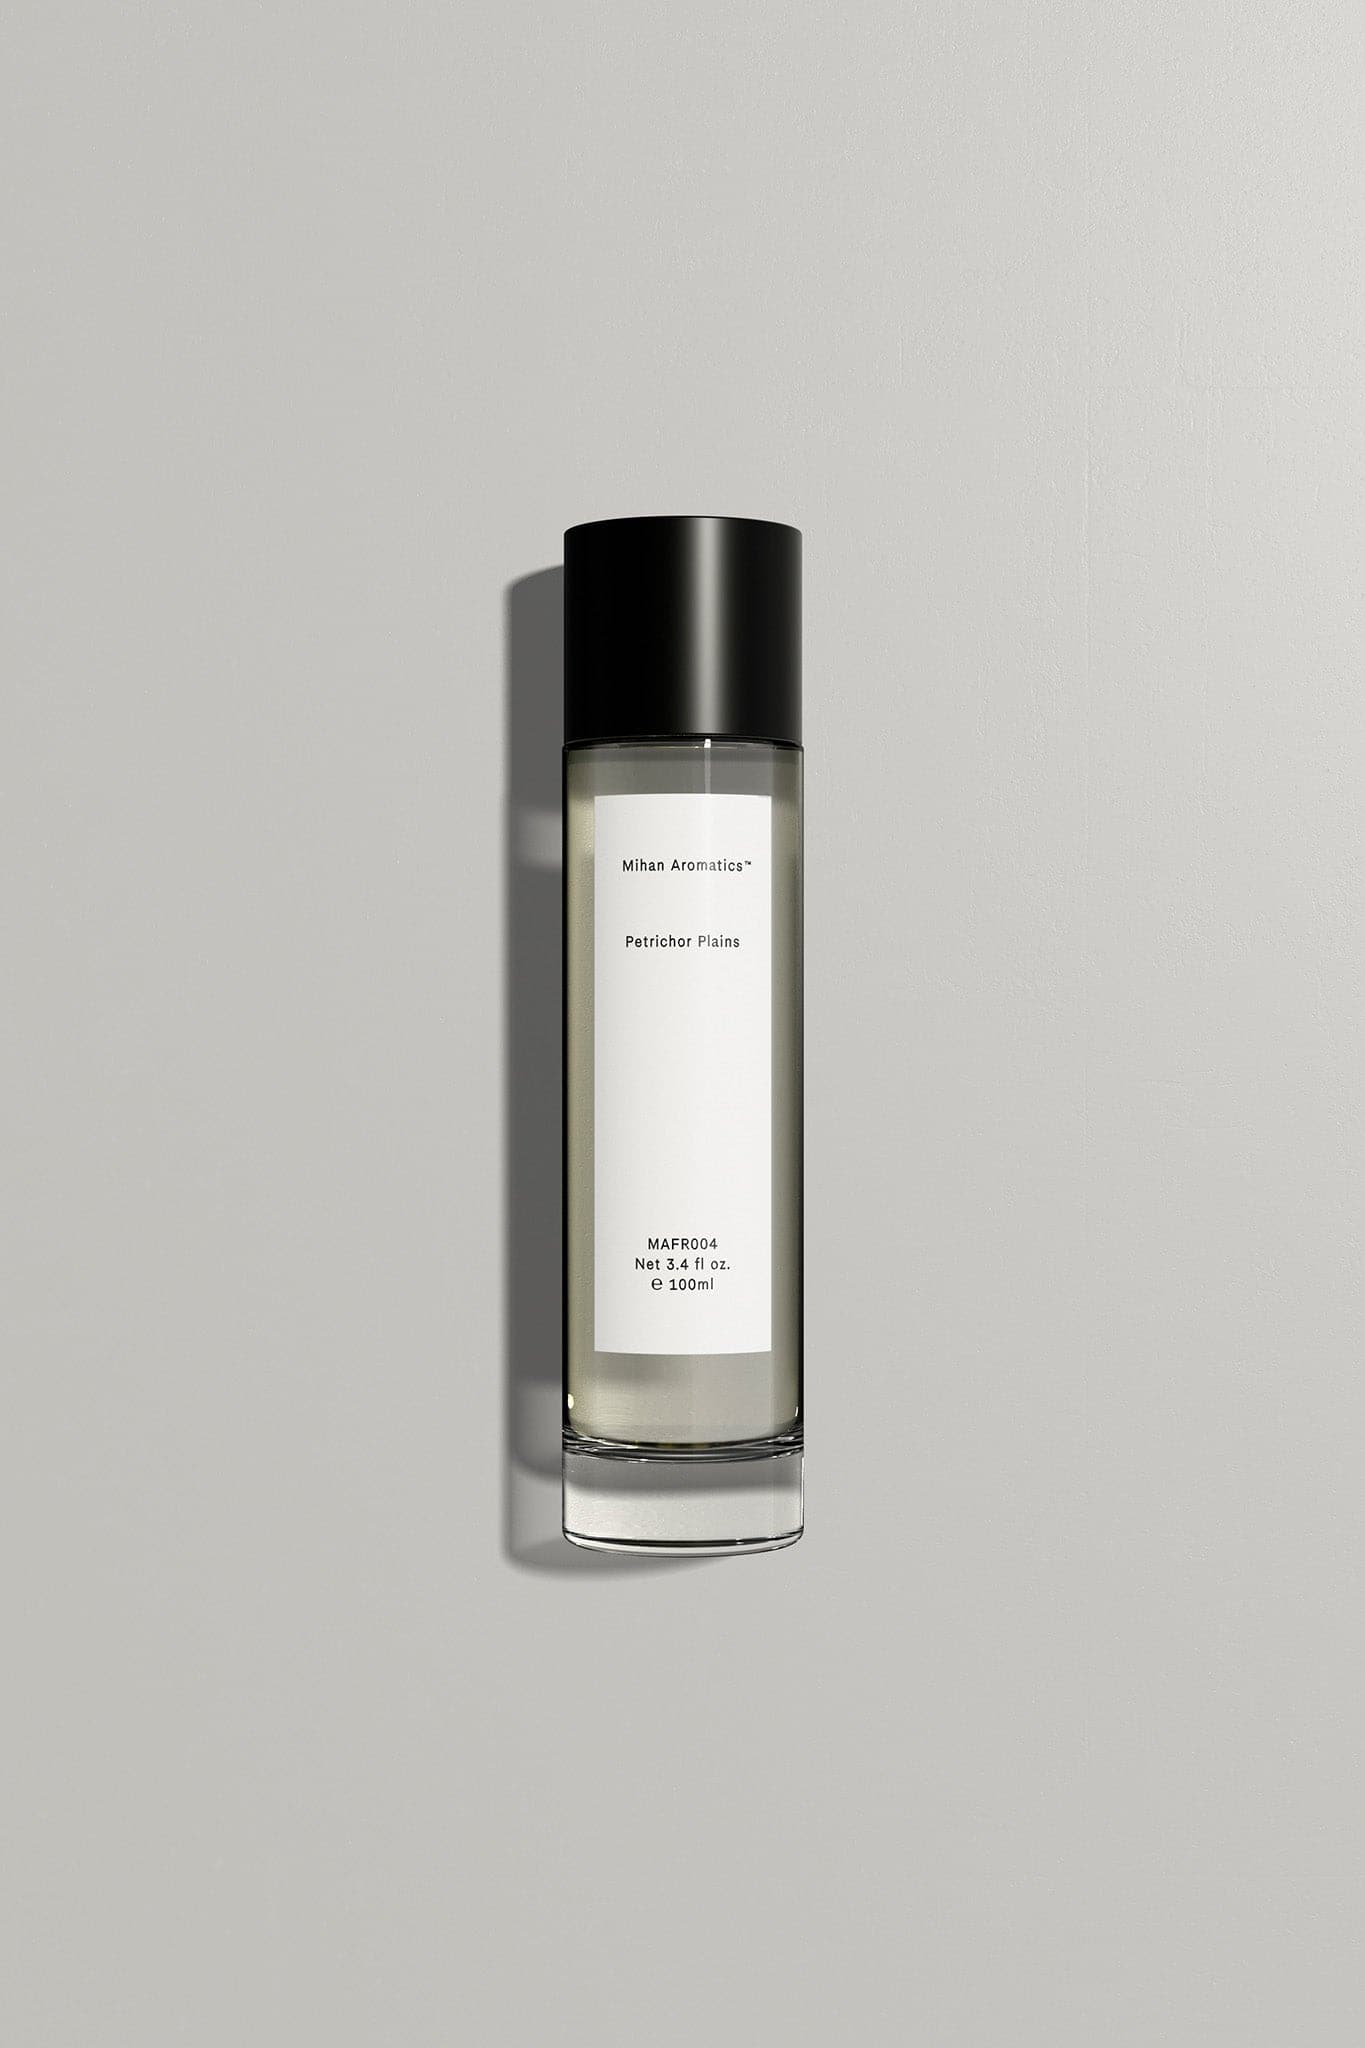 Mihan Aromatics - Petrichor Plains Parfum - Marz Designs AUMihan Aromatics